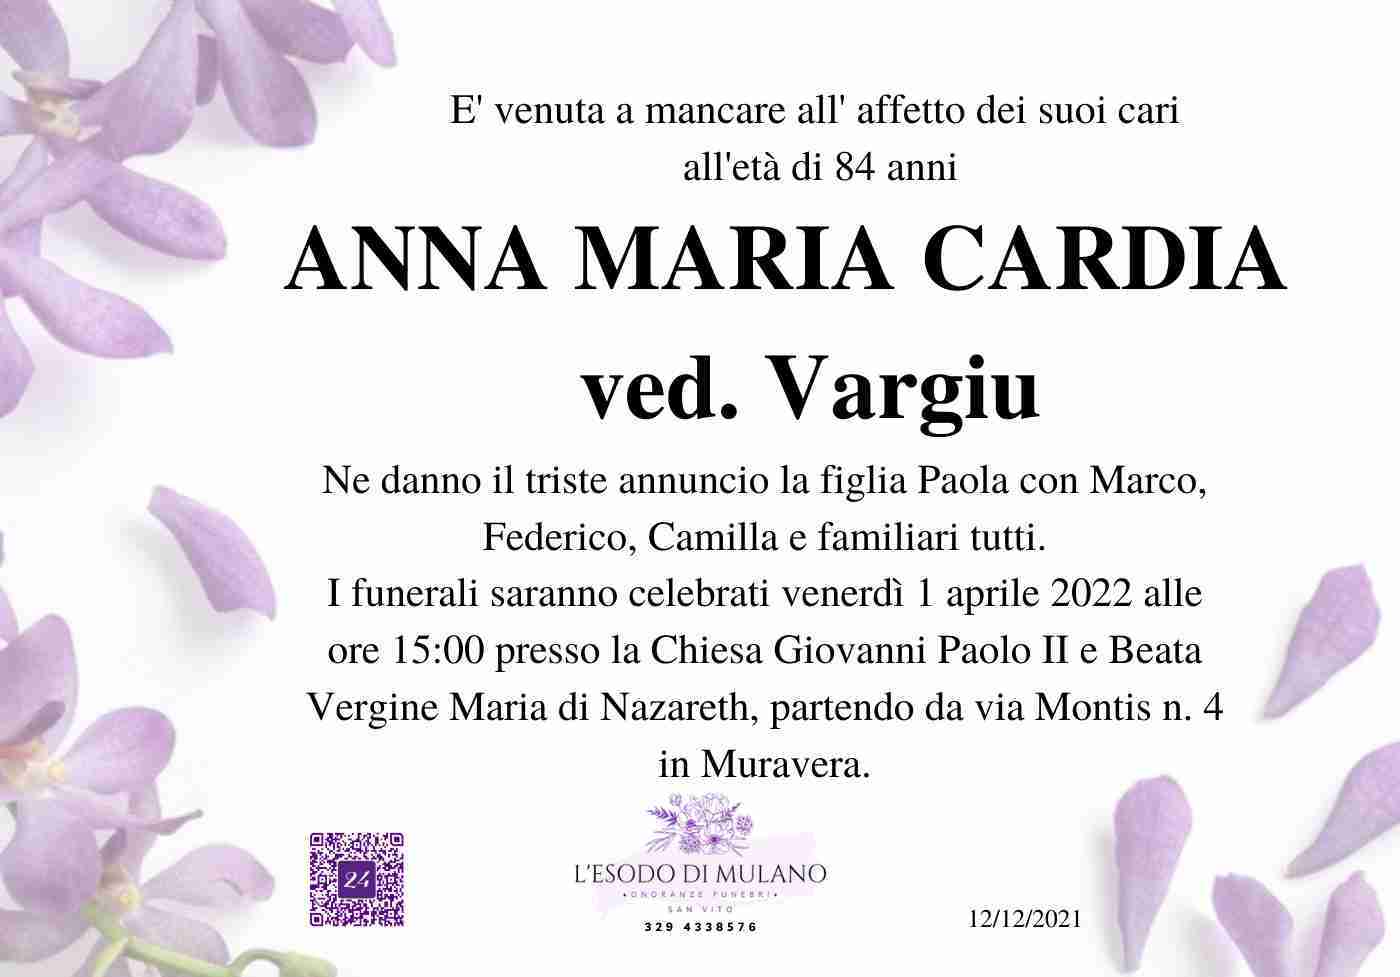 Anna Maria Cardia